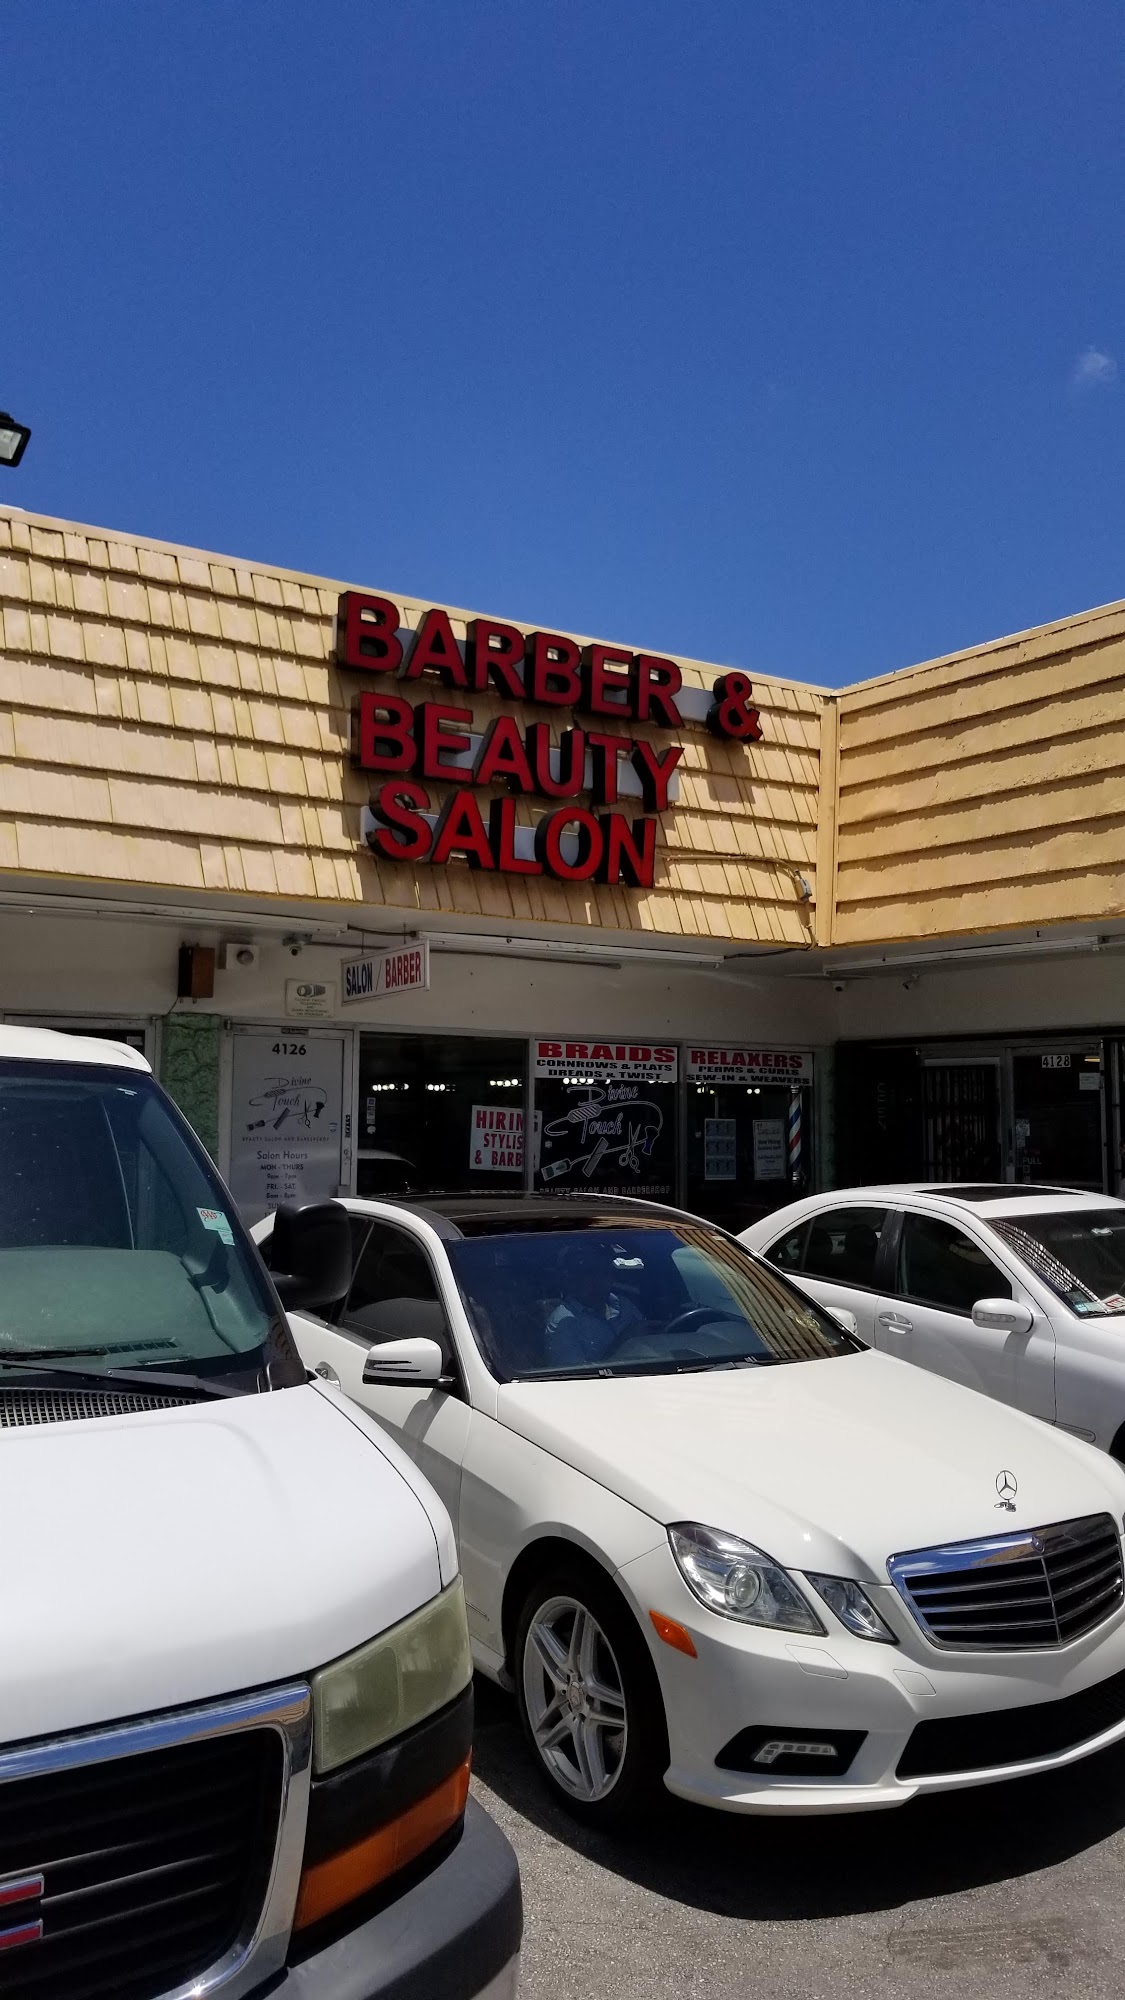 The Divine Touch (Barber Shop/Salon)